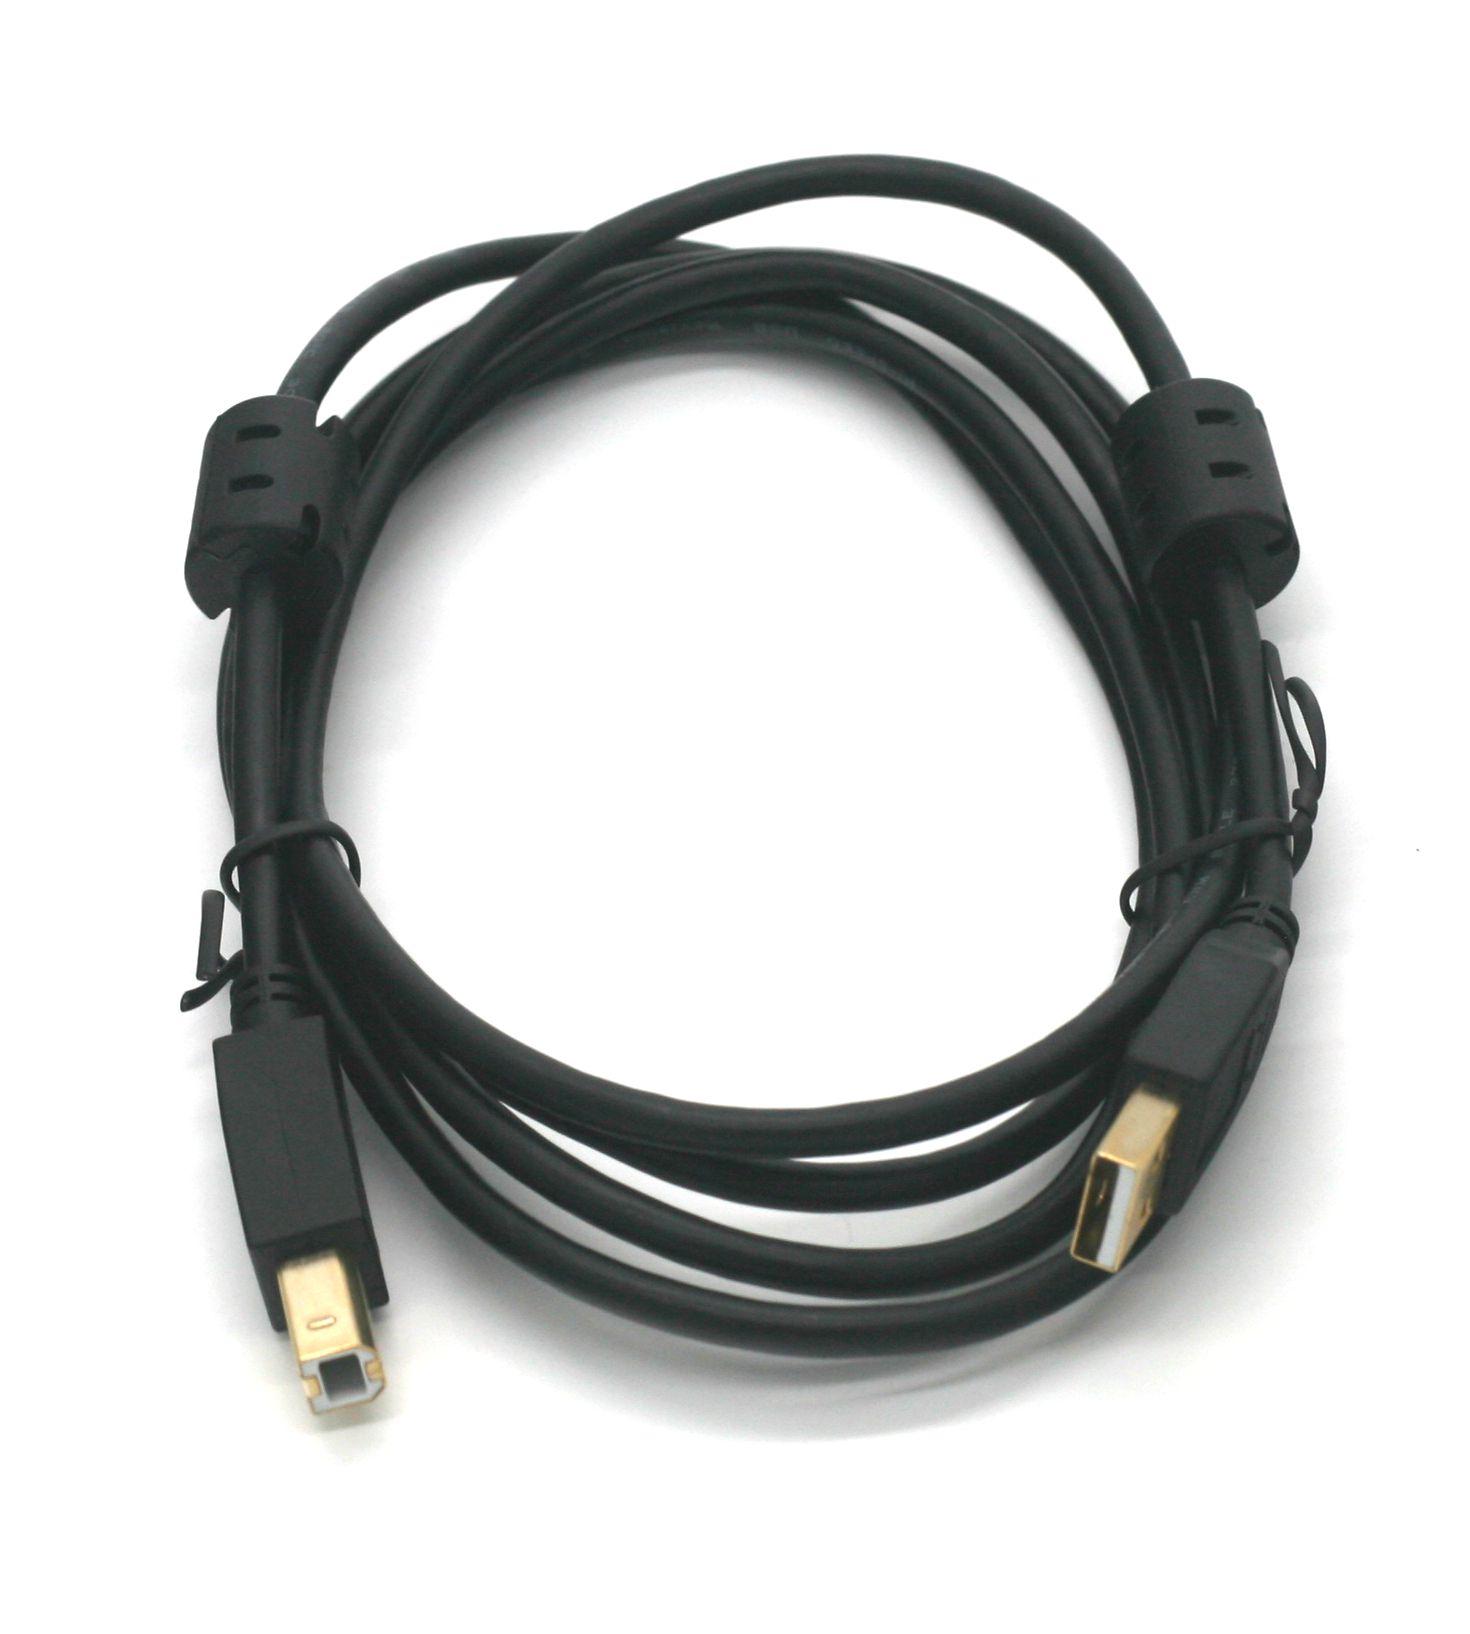 USB 2.0 Cable 6FT Dual Ferrite Chokes Black A-B (U023-006) USA